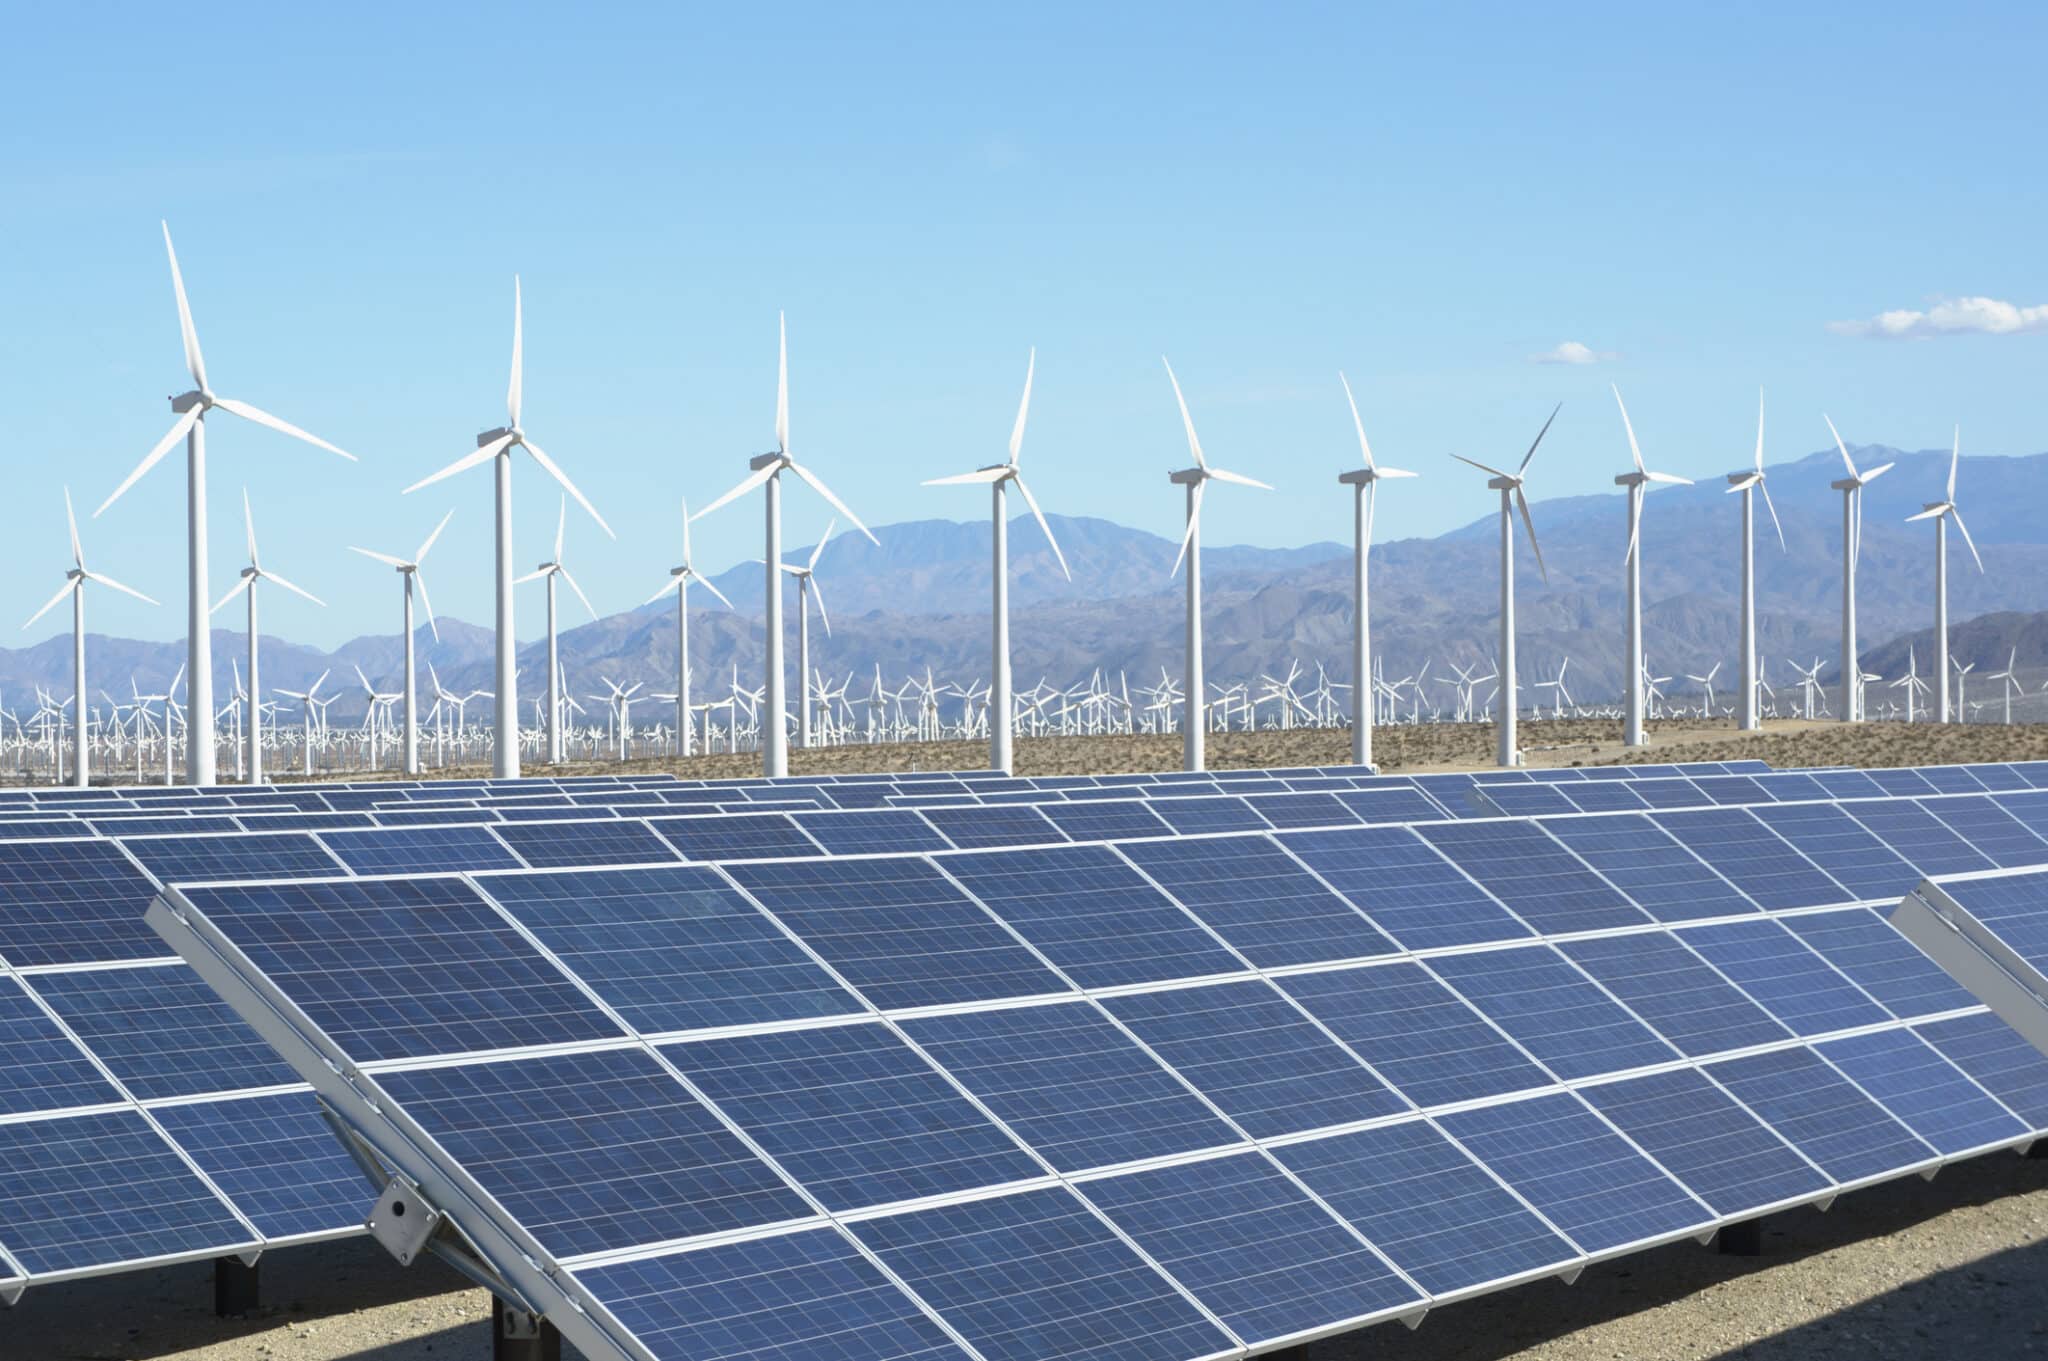 Solar panels and wind turbines Photovoltaic solar panels and wind turbines, San Gorgonio Pass Wind Farm, Palm Springs, California, USA